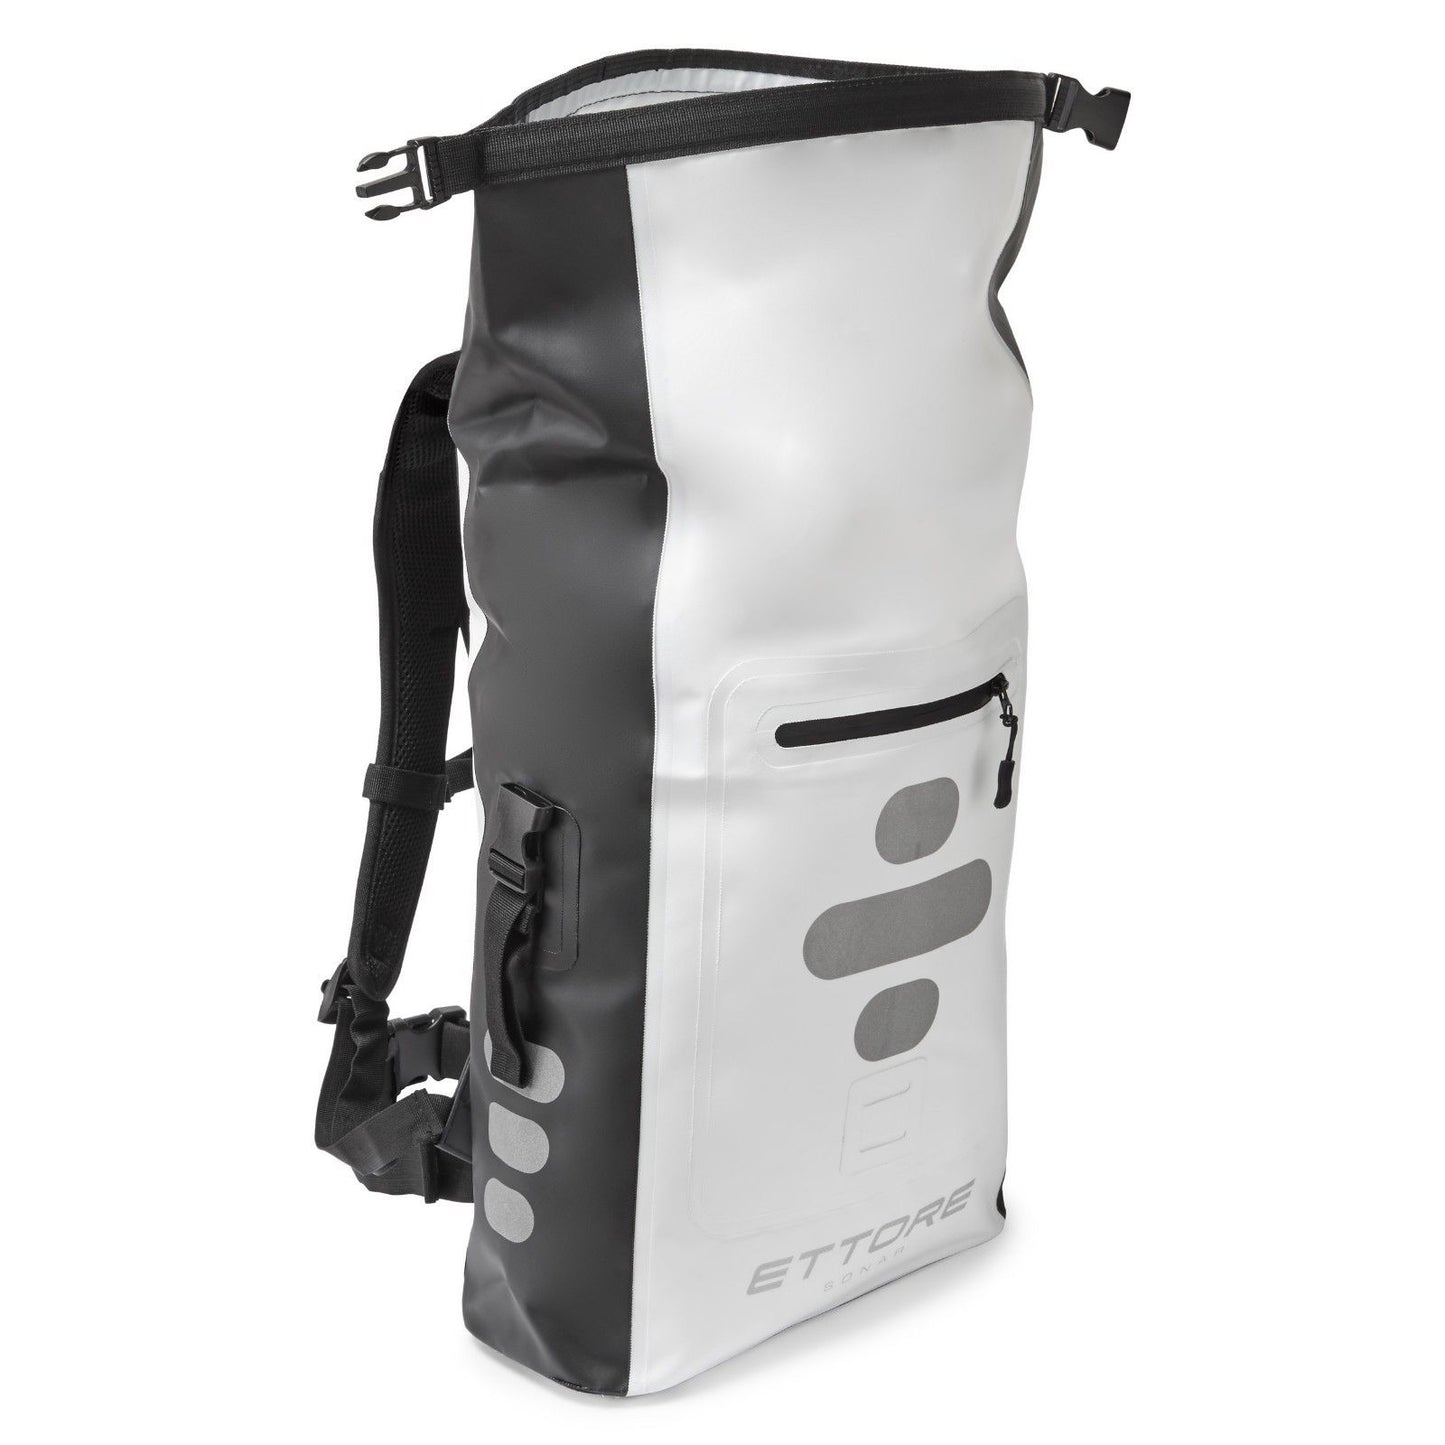 Ettore Sonar Cycling Rucksack 100% Waterproof Dry Bag Black/White